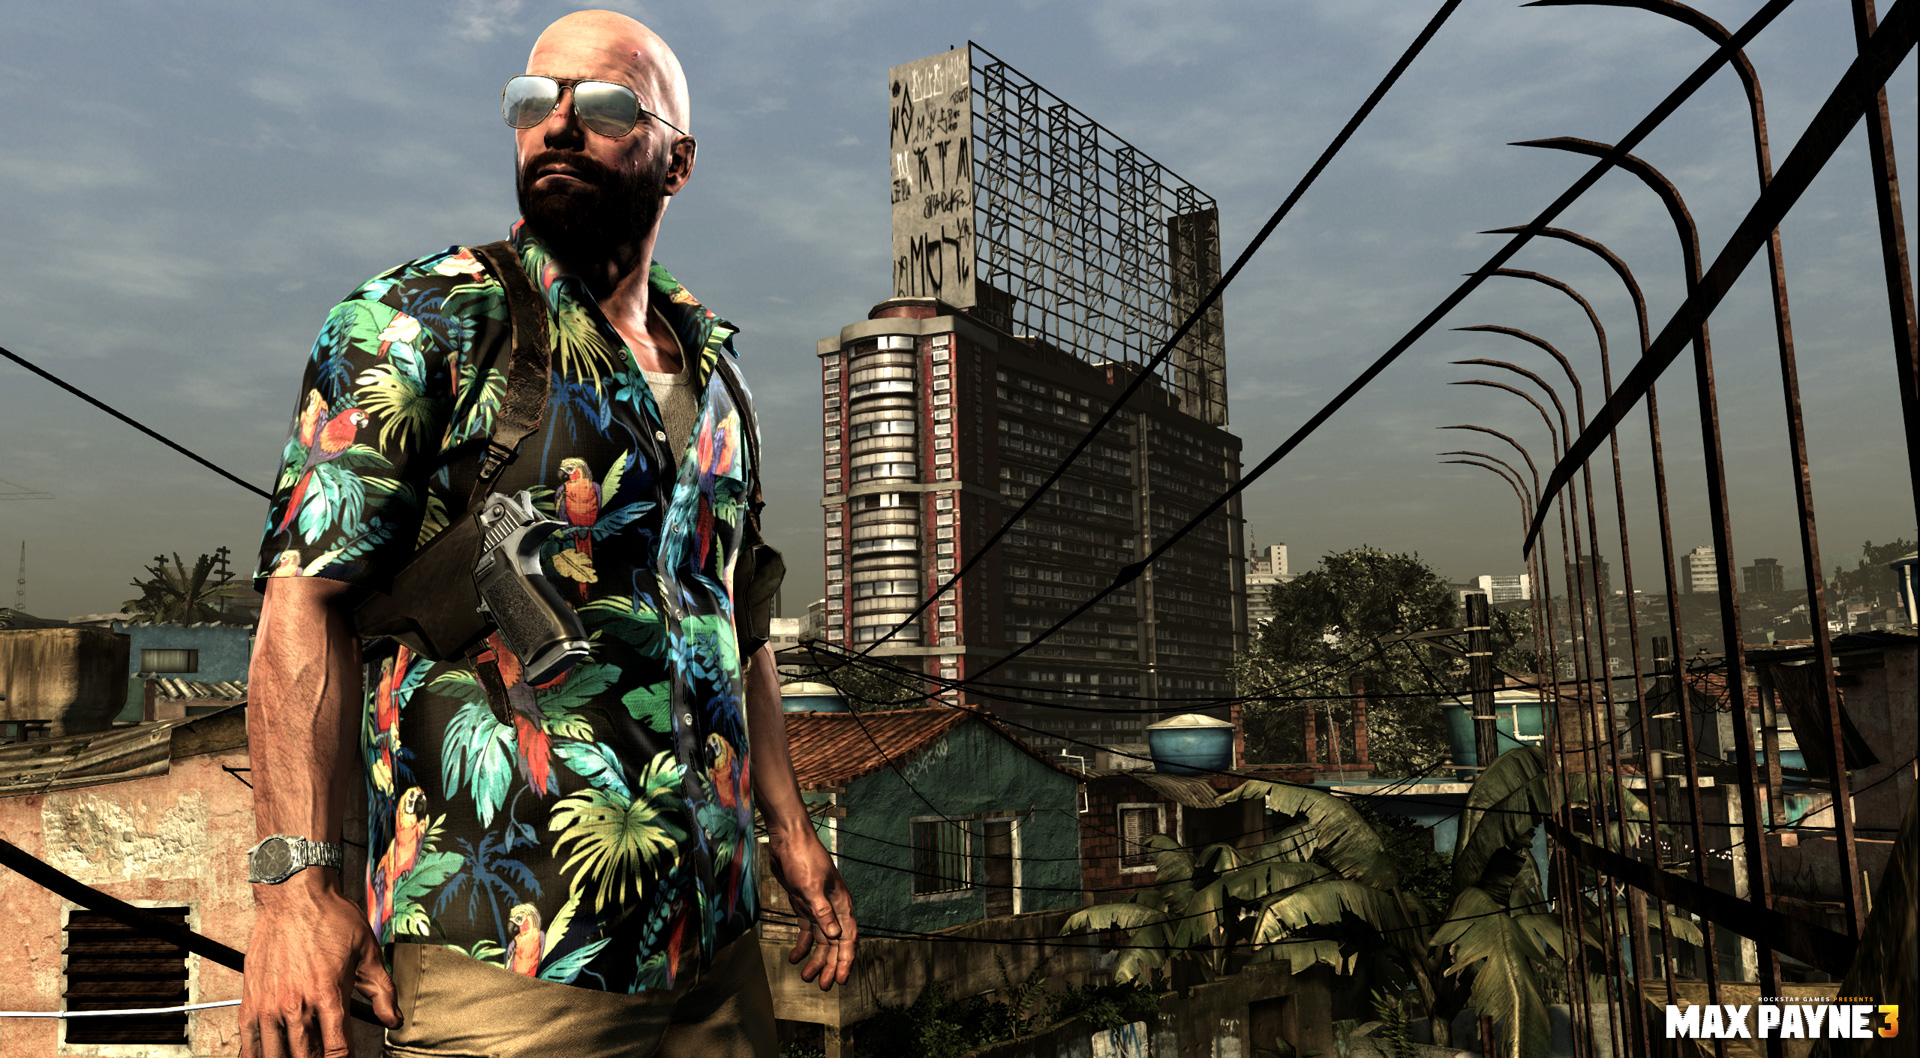 Media asset in full size related to 3dfxzone.it news item entitled as follows: Rockstar Games pubblica i primi screenshot di Max Payne 3 per PC | Image Name: news16706_2.jpg